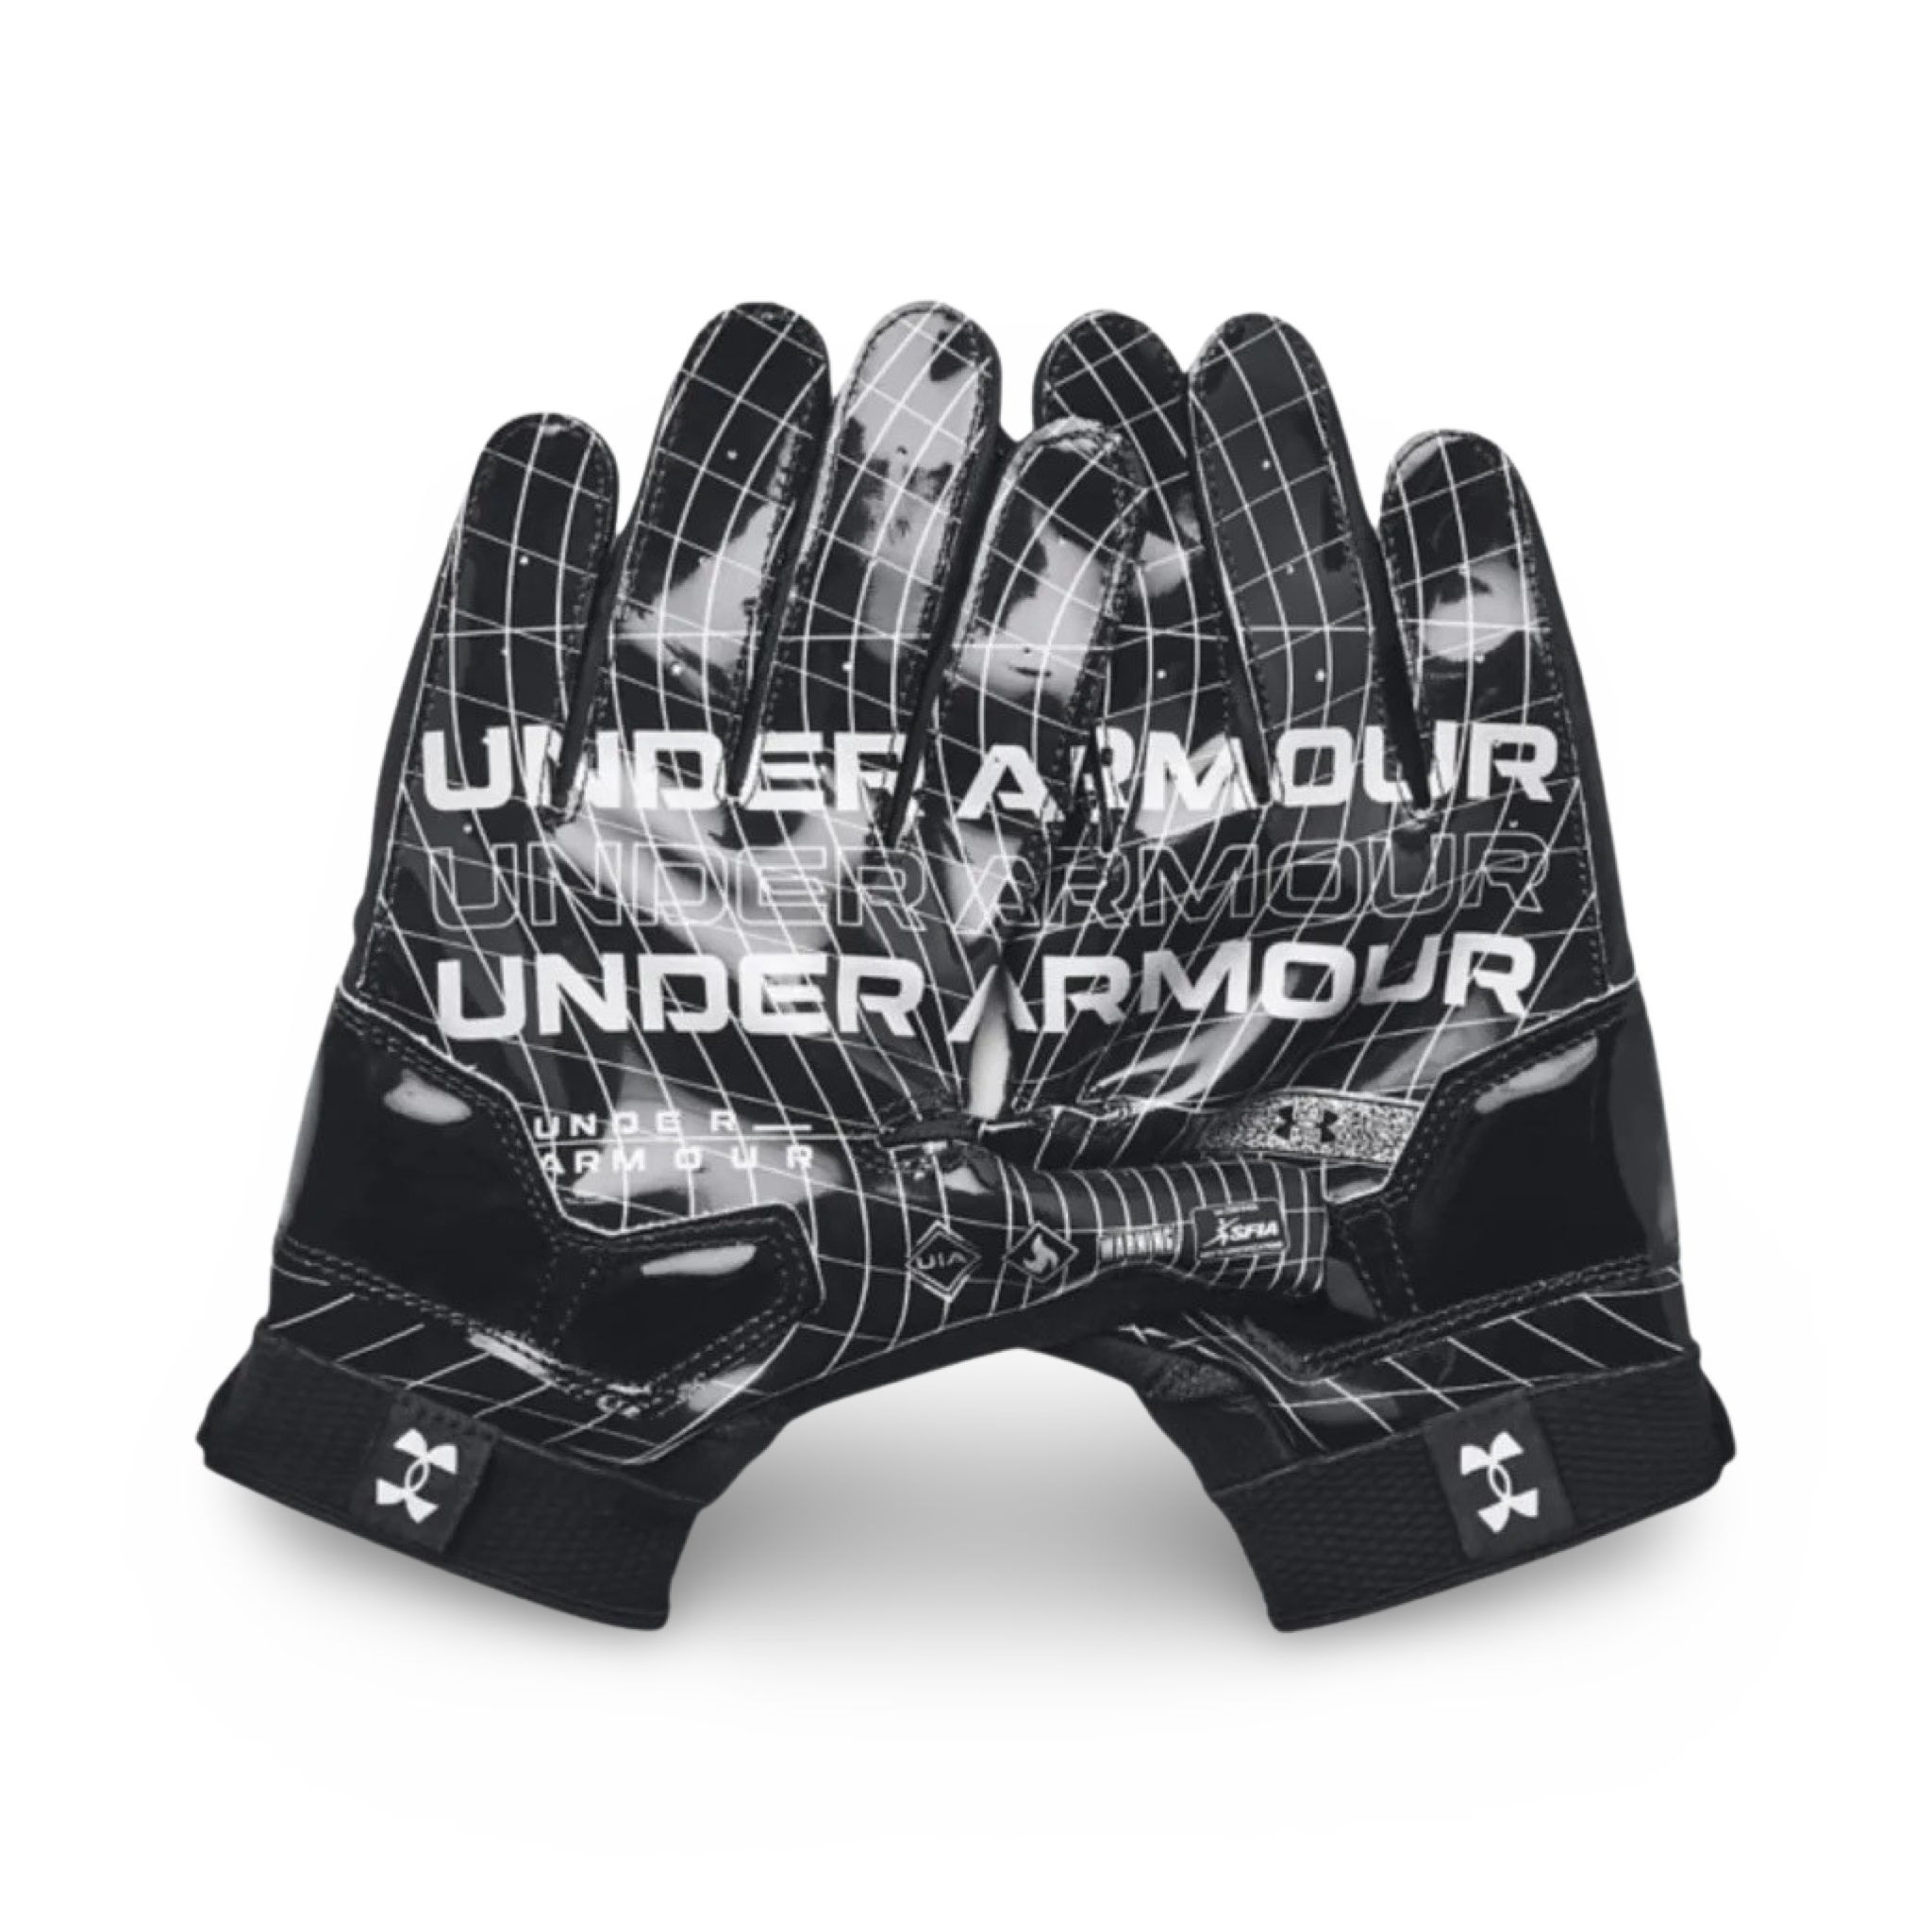 Under Armor Men's Combat Lineman Football Gloves 